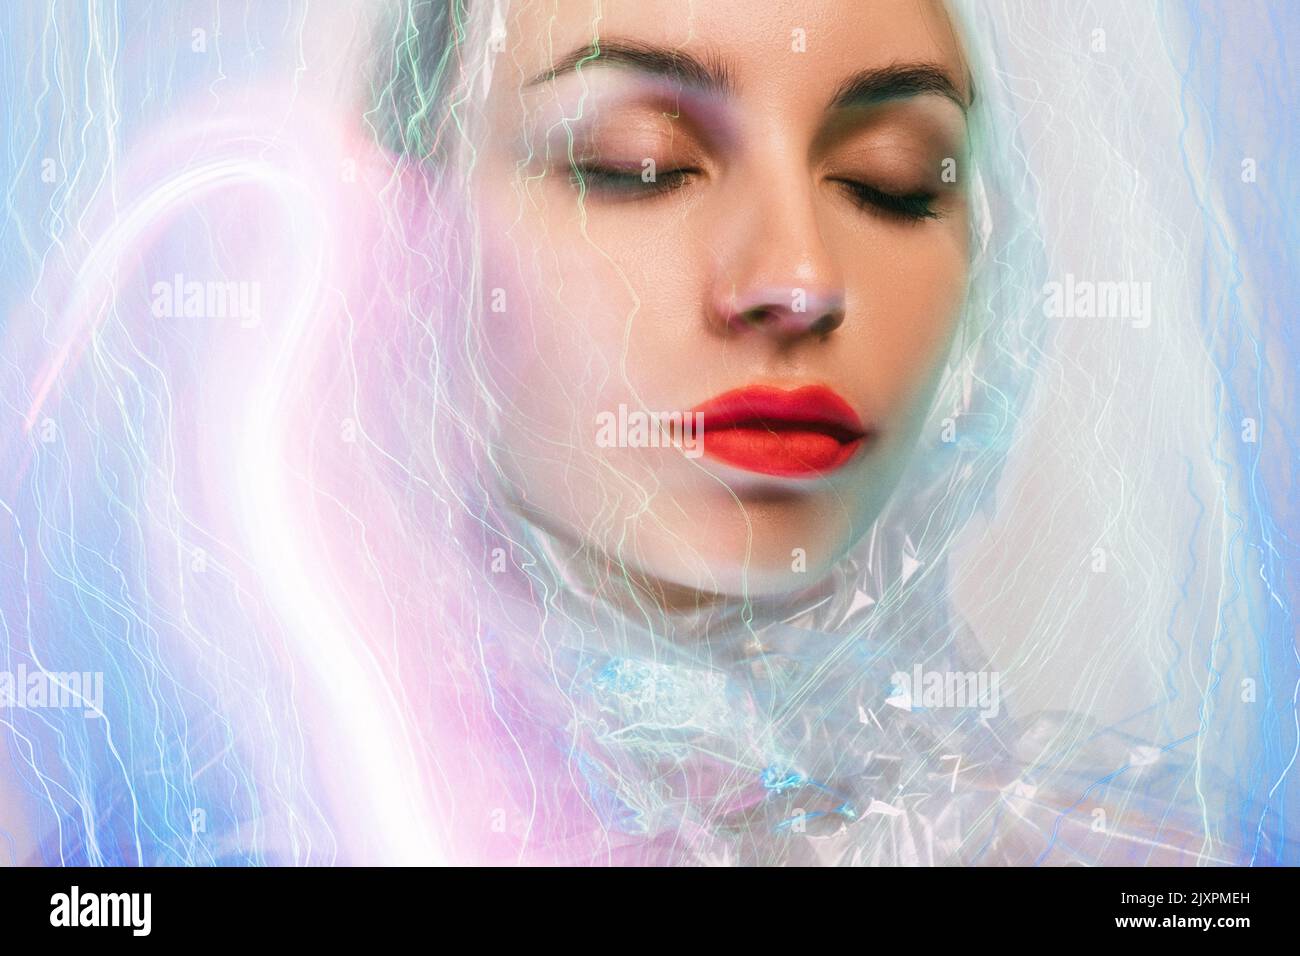 neon light portrait skin rejuvenation face woman Stock Photo